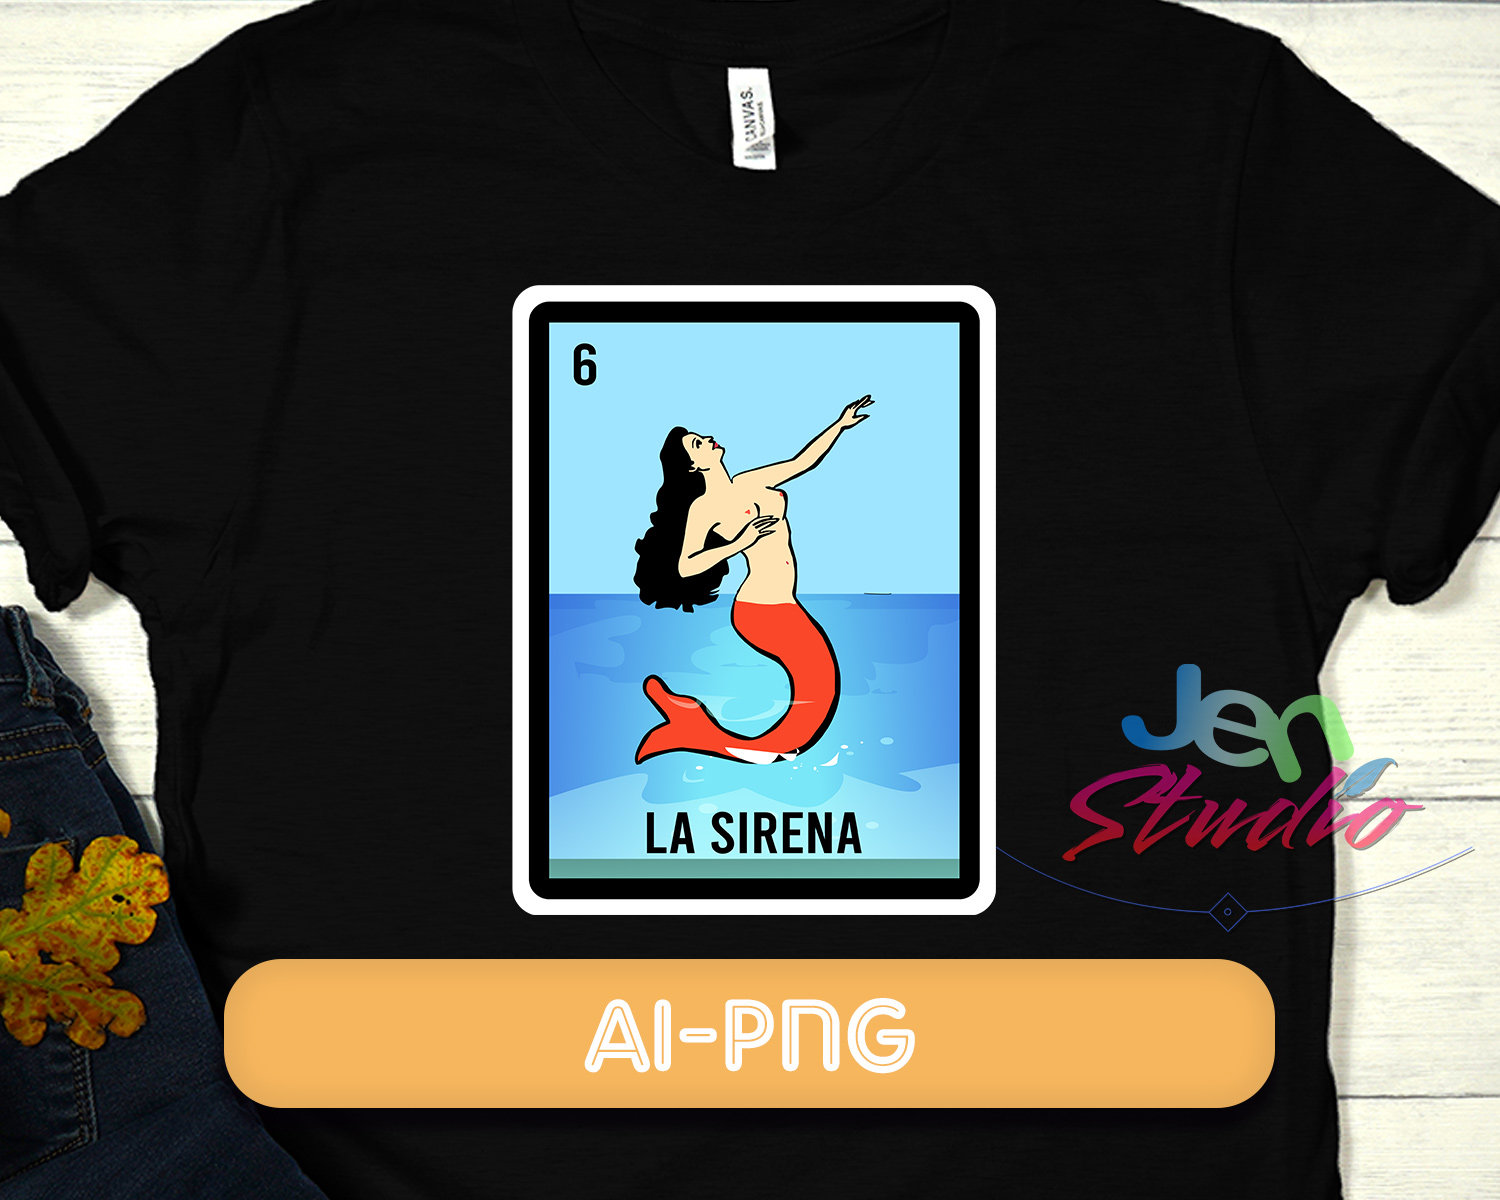 La Fitness Raglan Loteria Tee Shirt Mexican Bingo Funny woman Lottery – X  Graphics Print